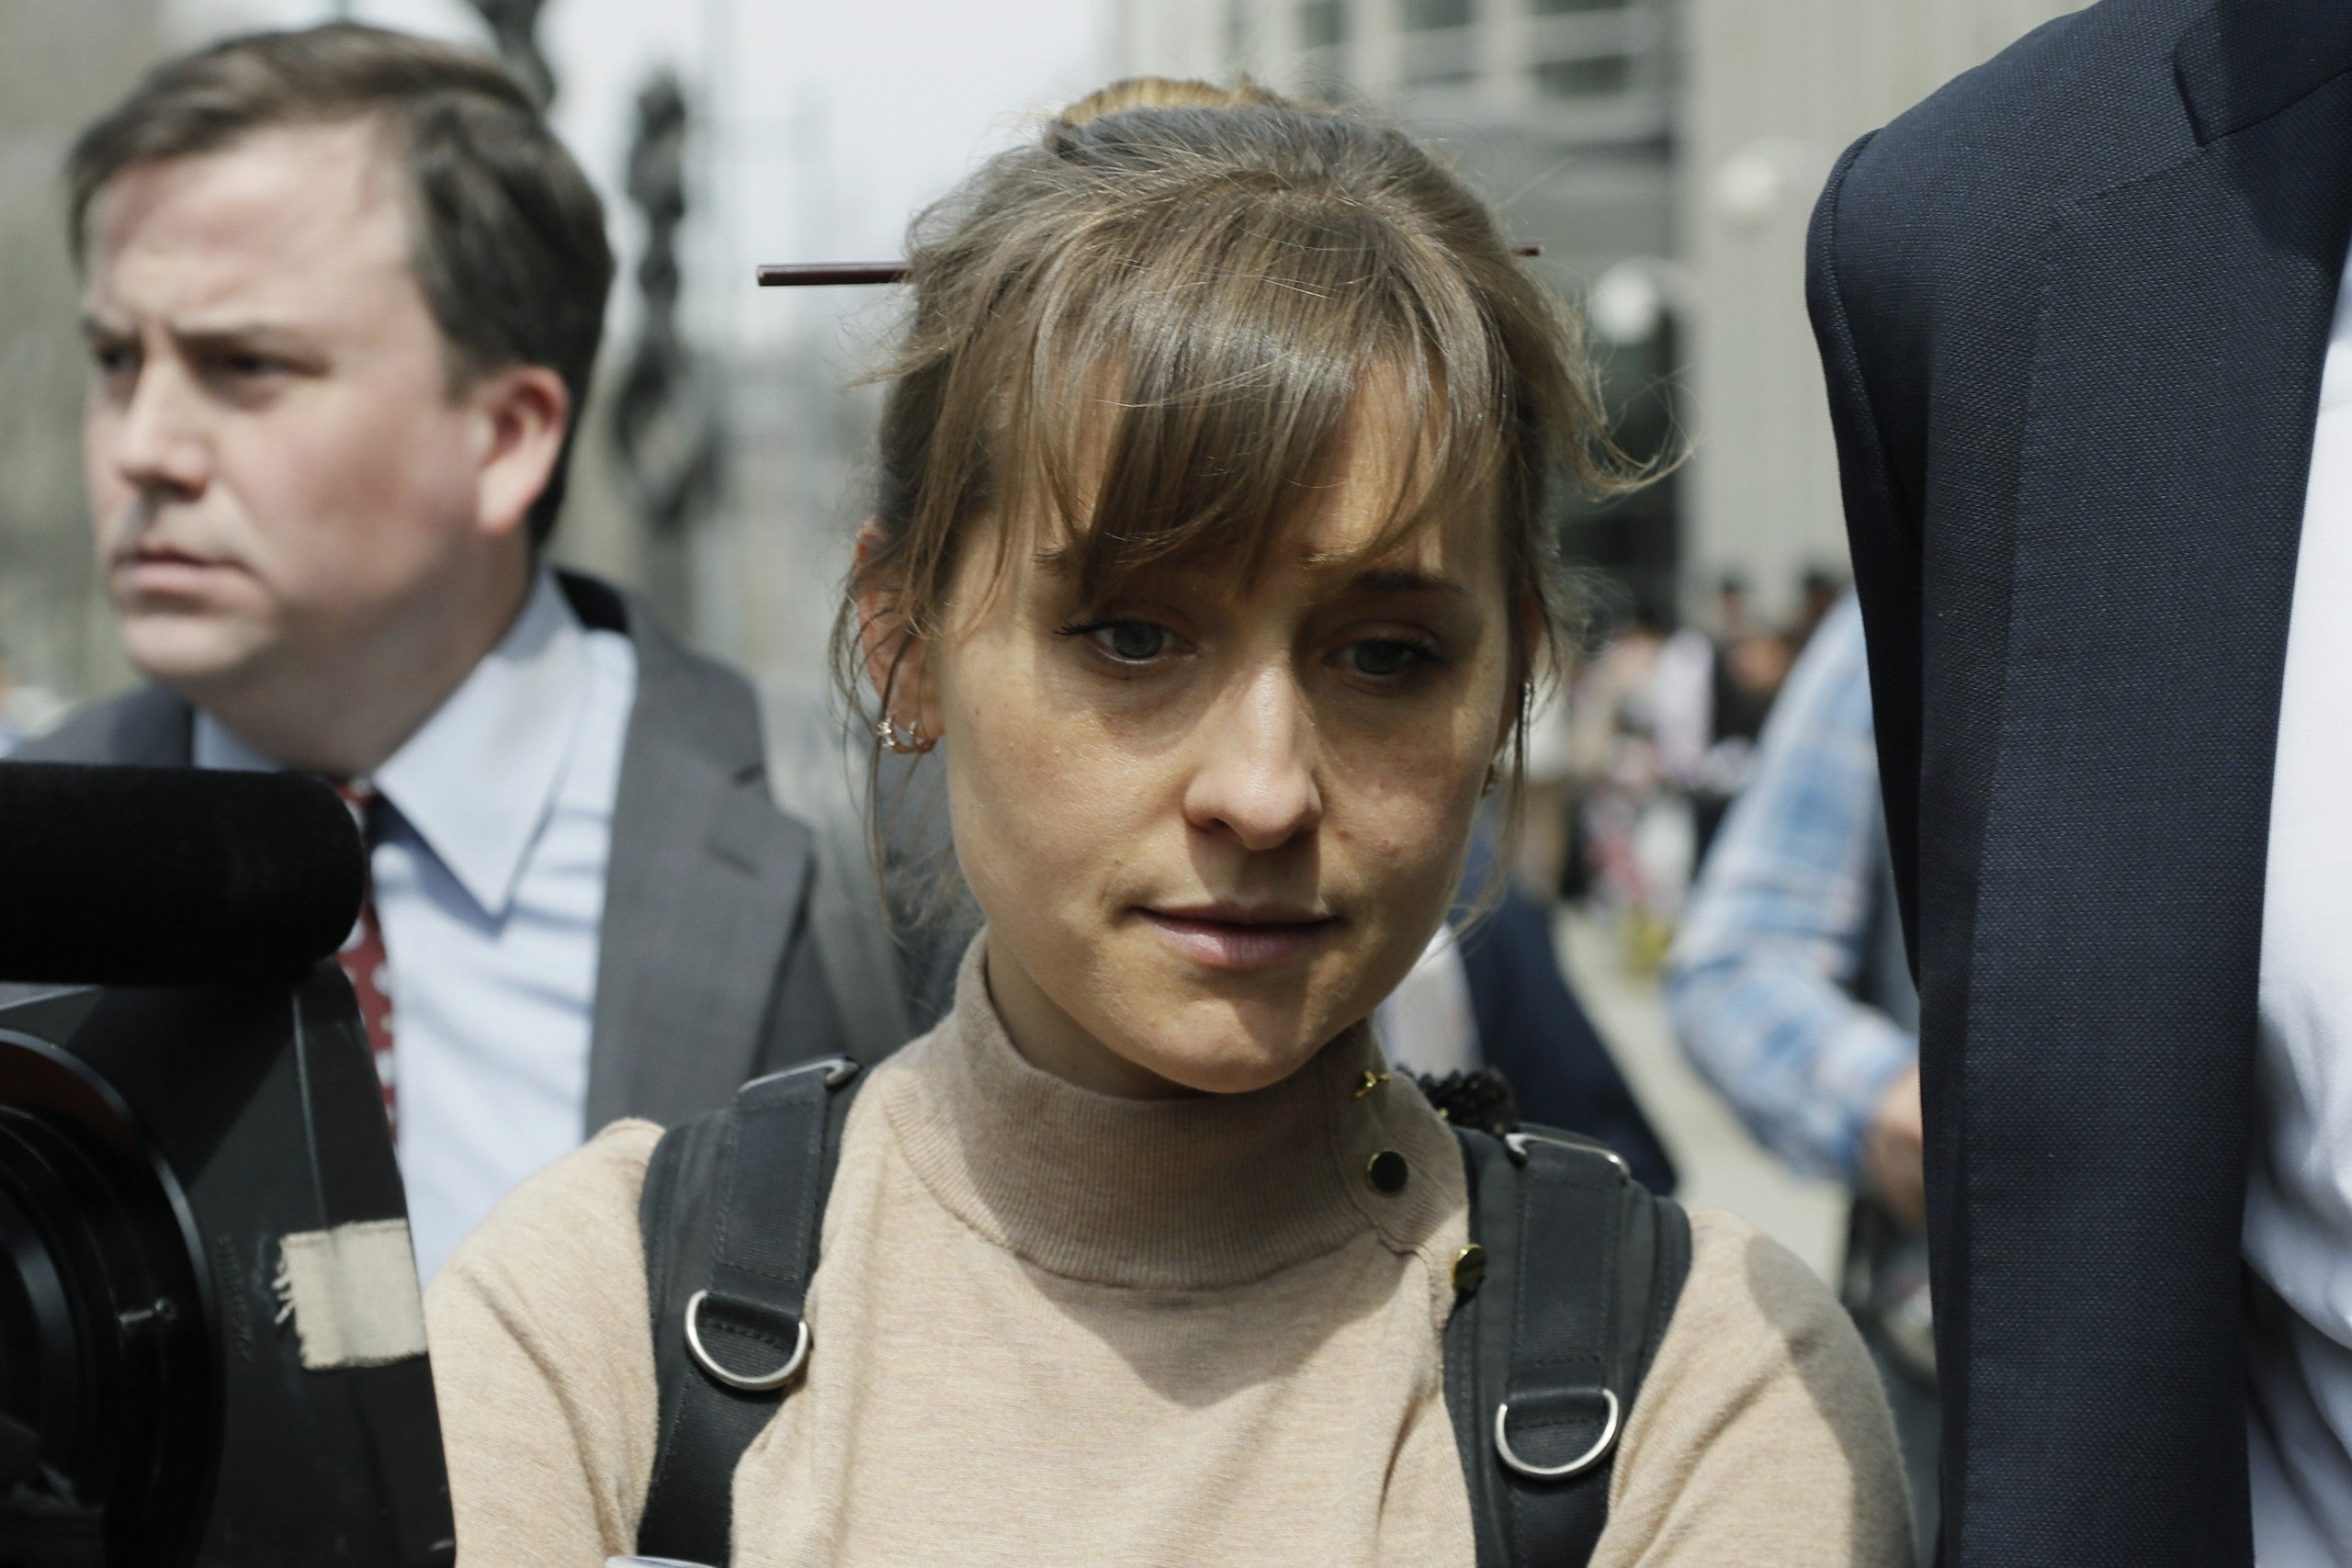 Actor Allison Mack faces sentencing in NXIVM sex-slave case